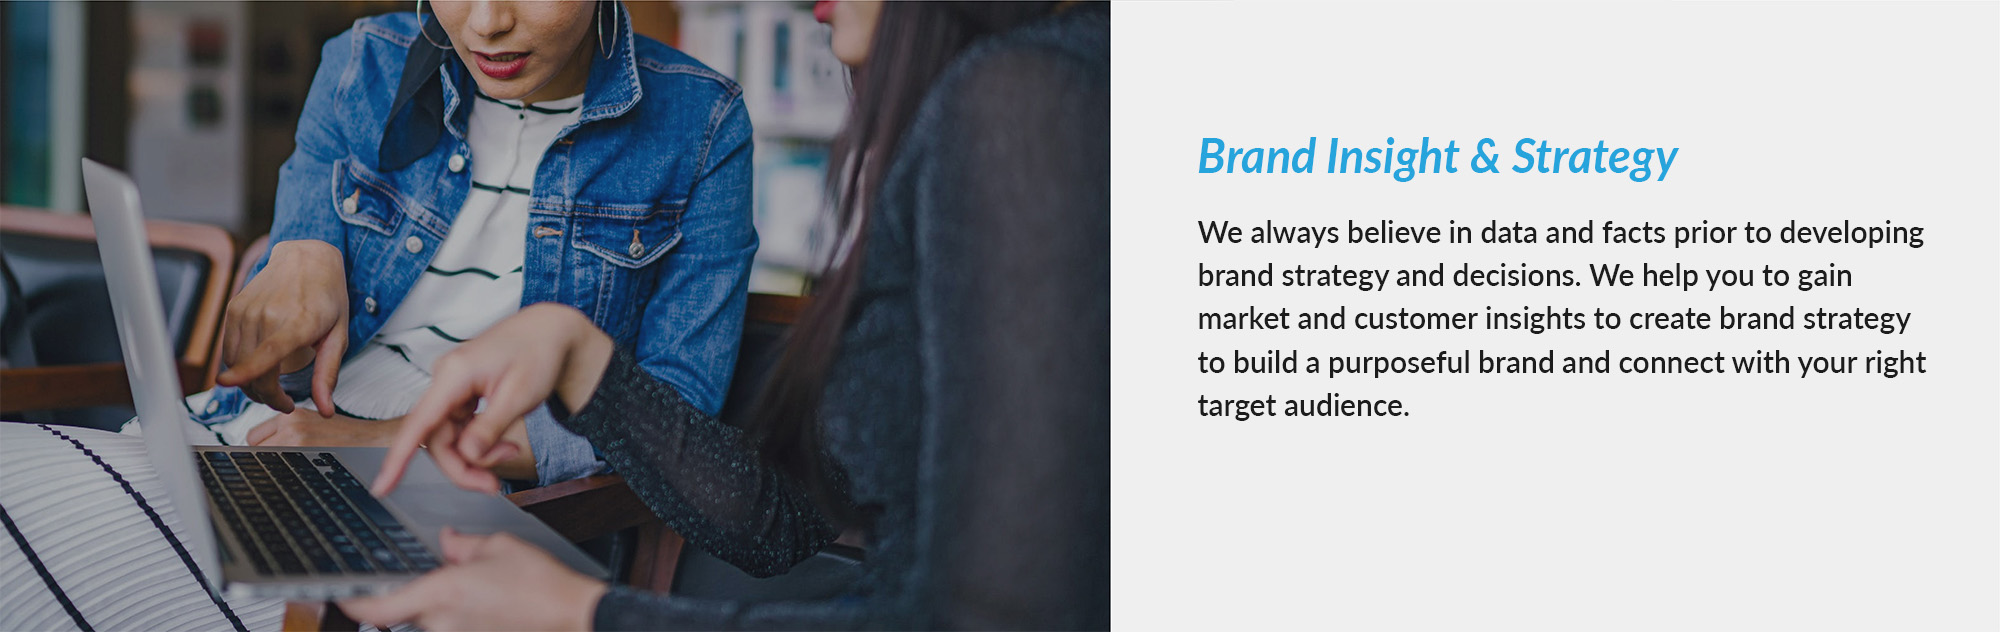 Brand Insight & Strategy